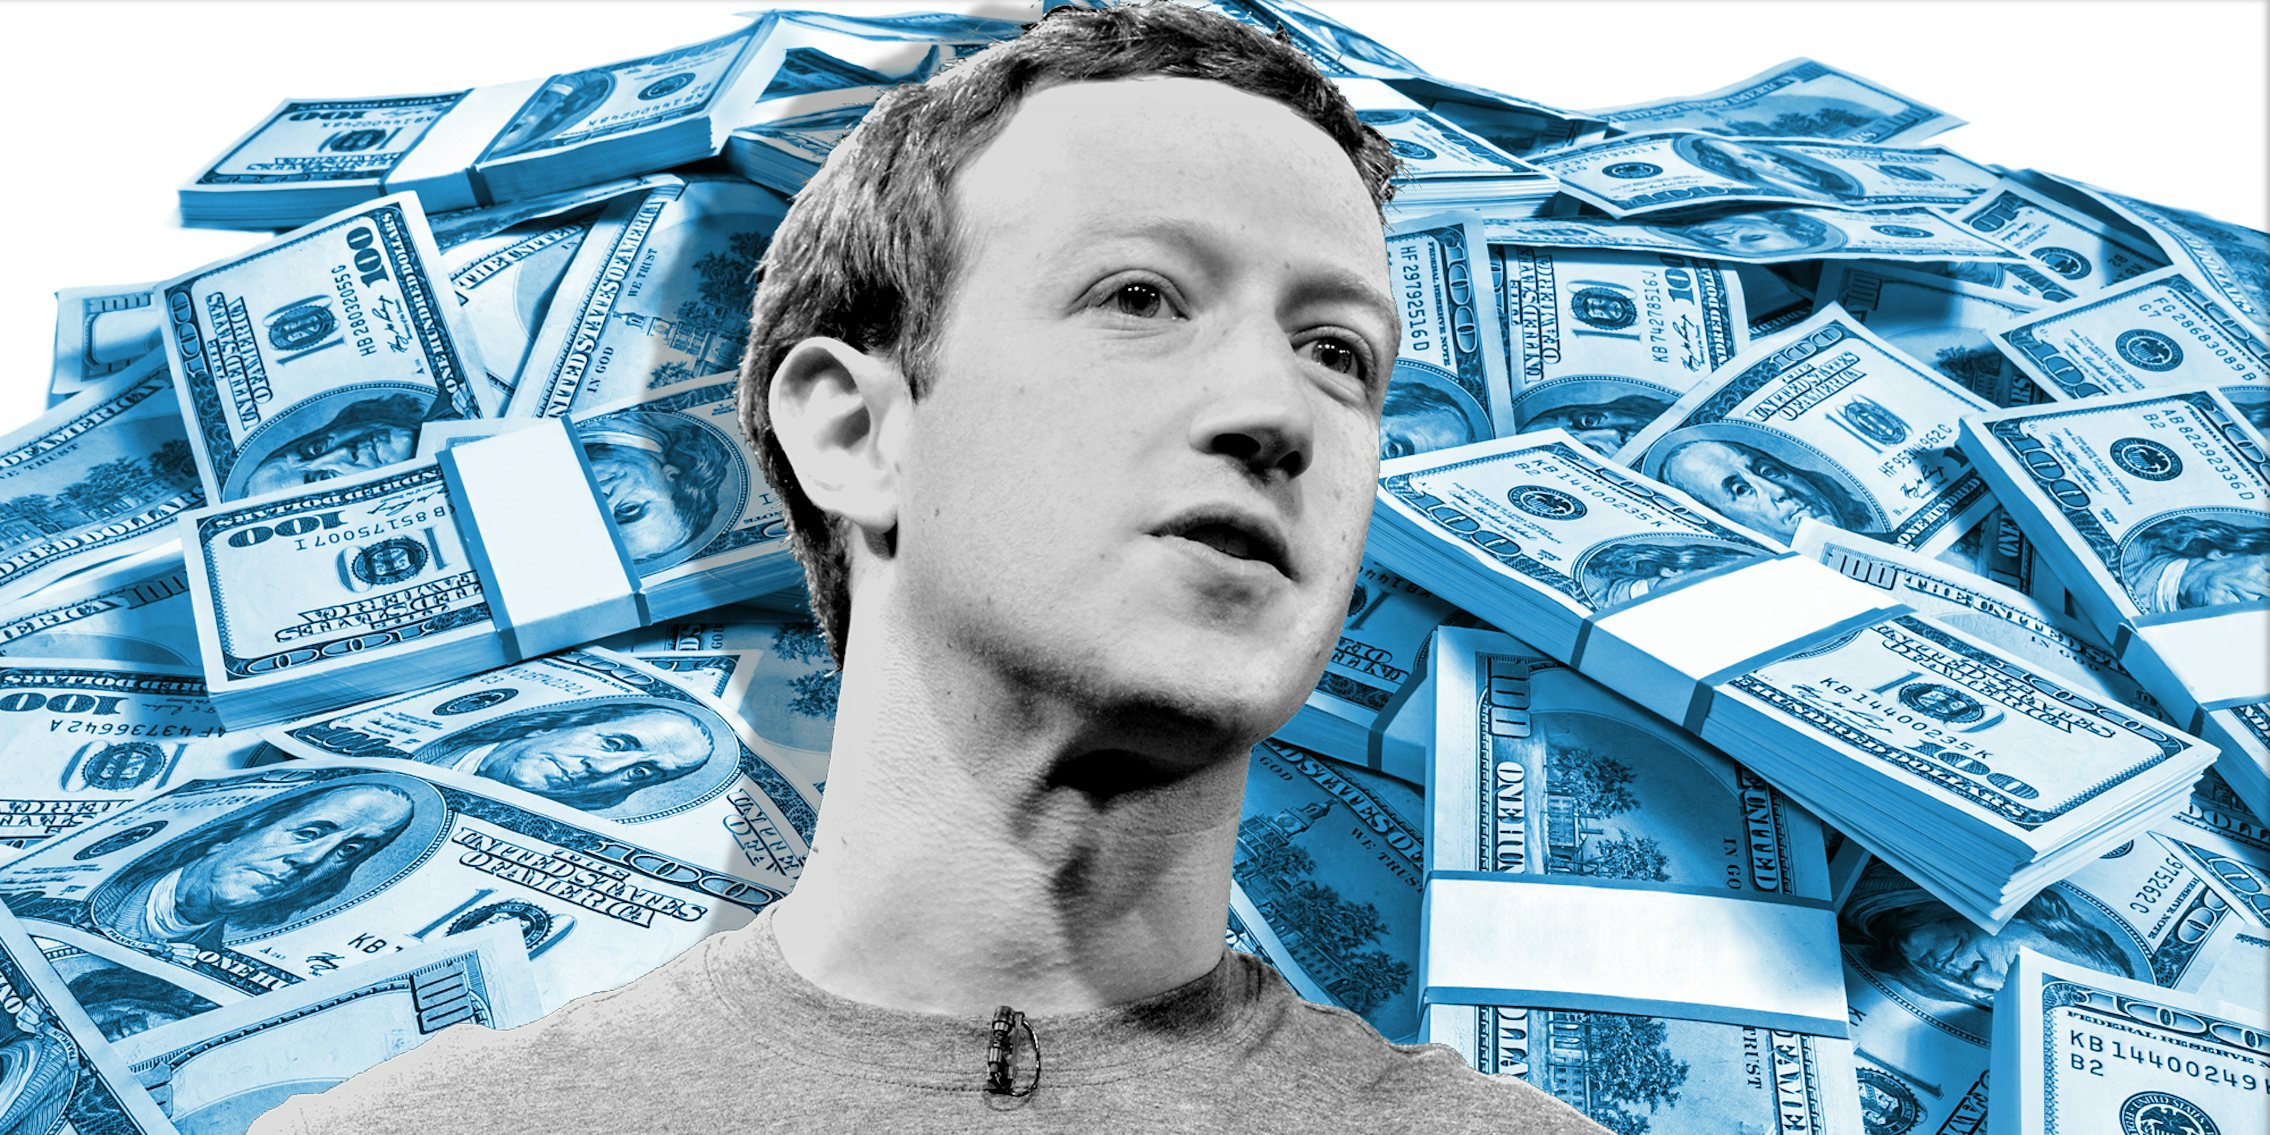 mark zuckerberg over piles of $100 billsas part of facebook lawsuit settlement claim